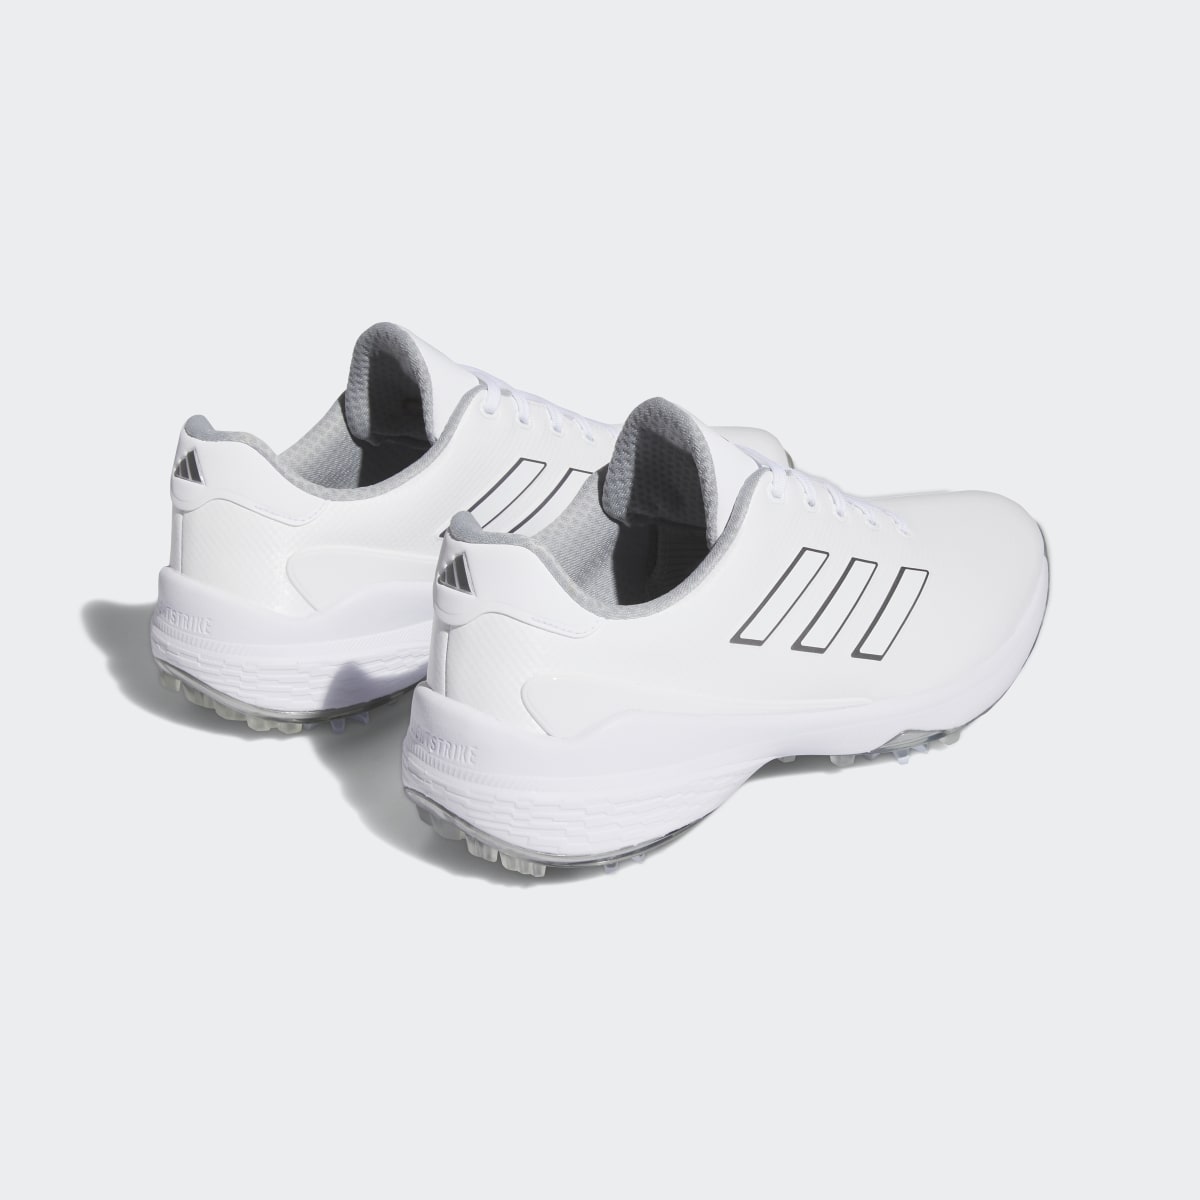 Adidas ZG23 Shoes. 6